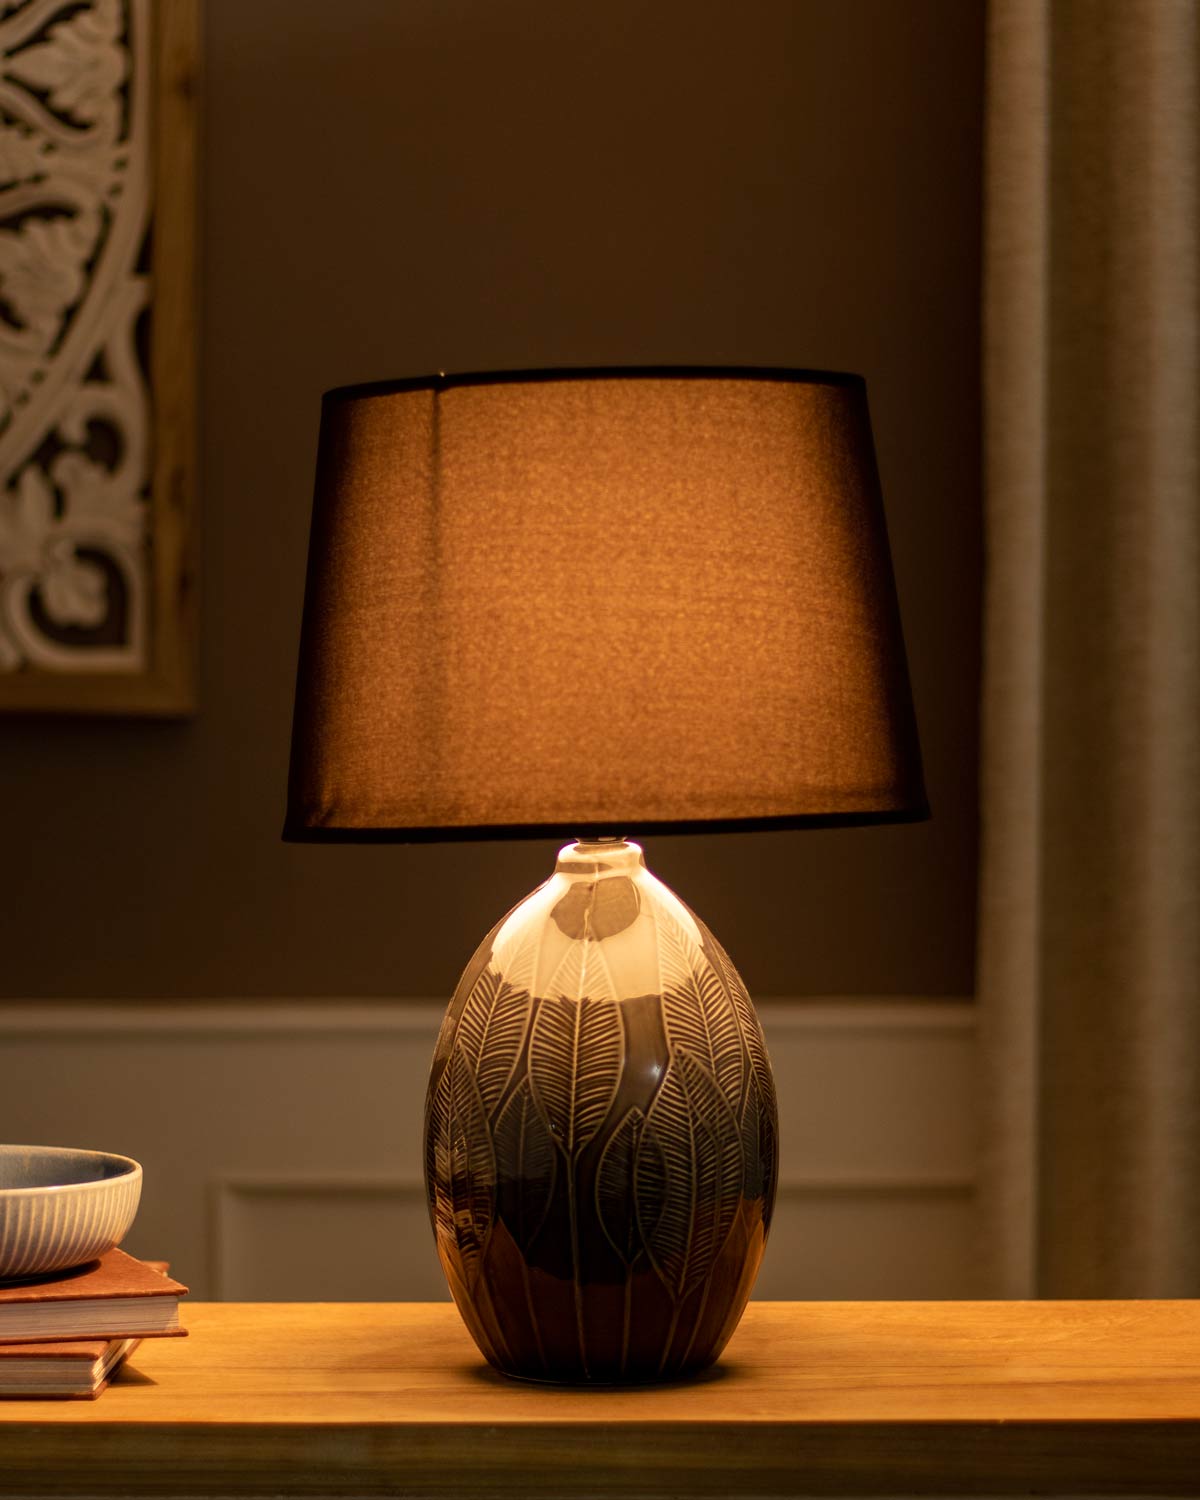 Ambiance Illuminated Ceramic Table Lamp - Black